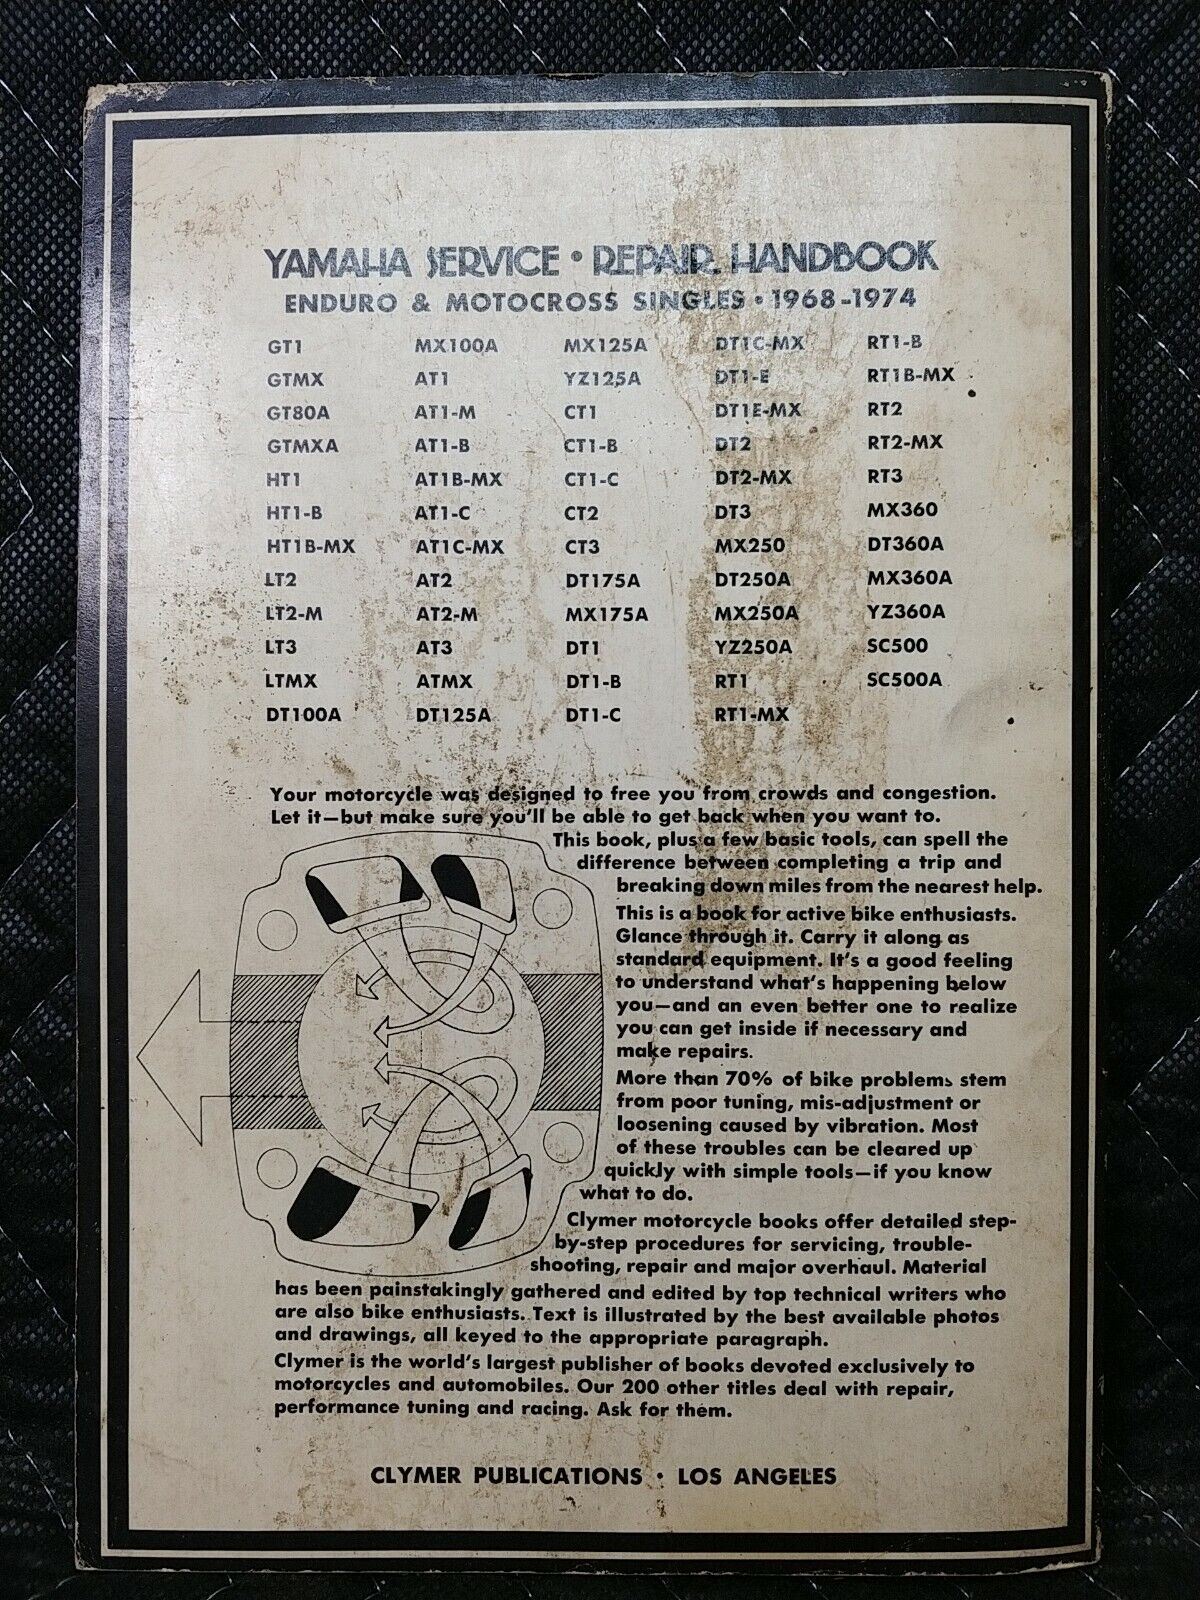 CLYMER YAMAHA 1968-1974 SERVICE REPAIR HANDBOOK FOR ENDURO & MOTOCROSS SINGLES